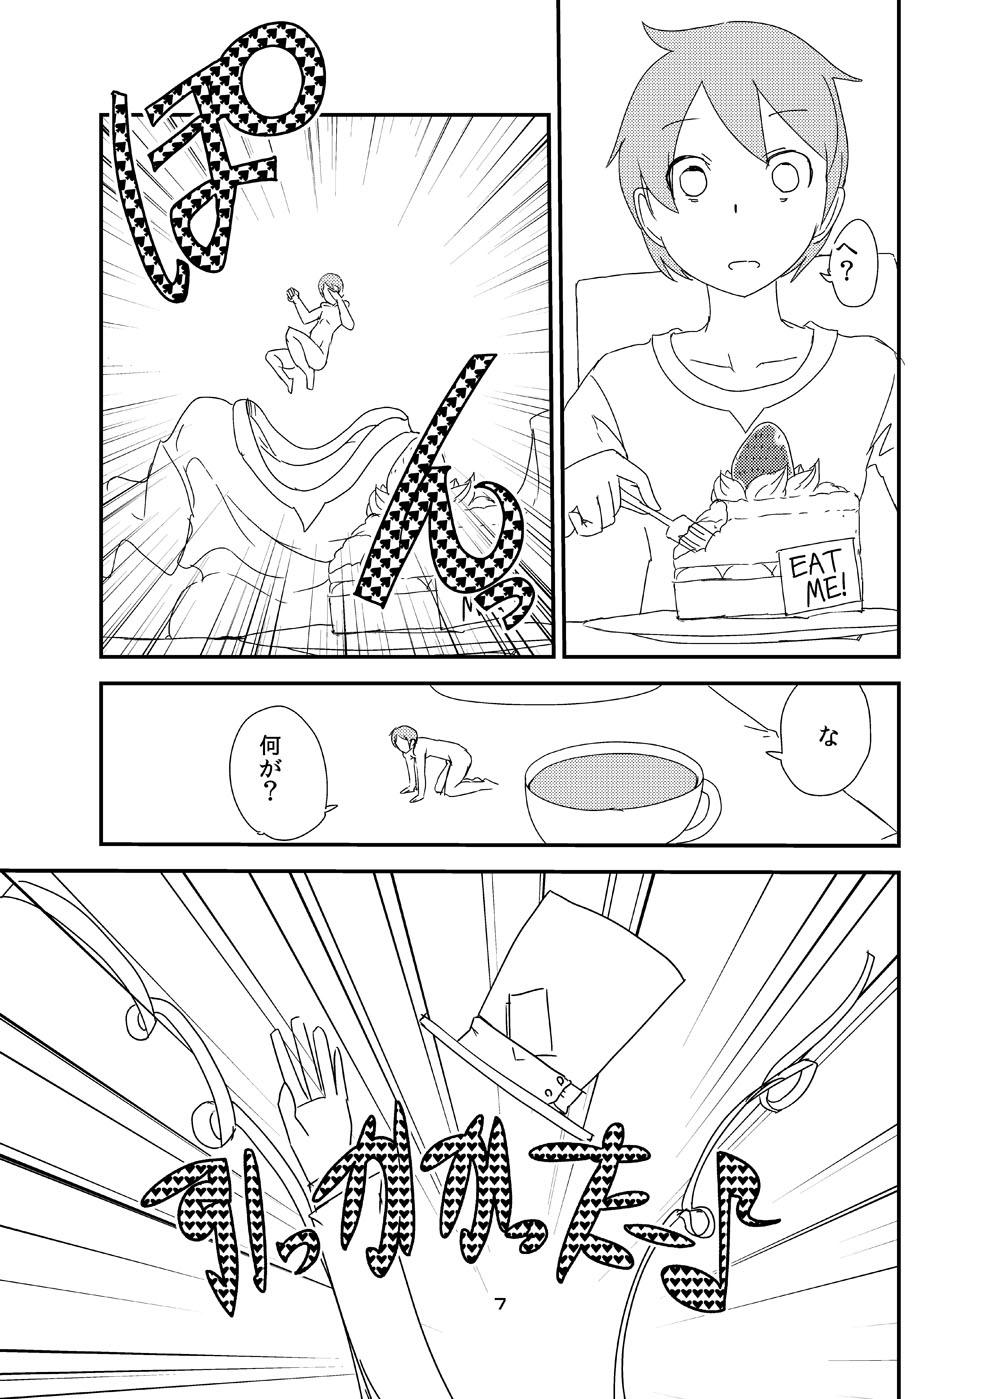 Cartoon Mon Musu Quest! Beyond The End 6 - Monster girl quest Ecchi - Page 6